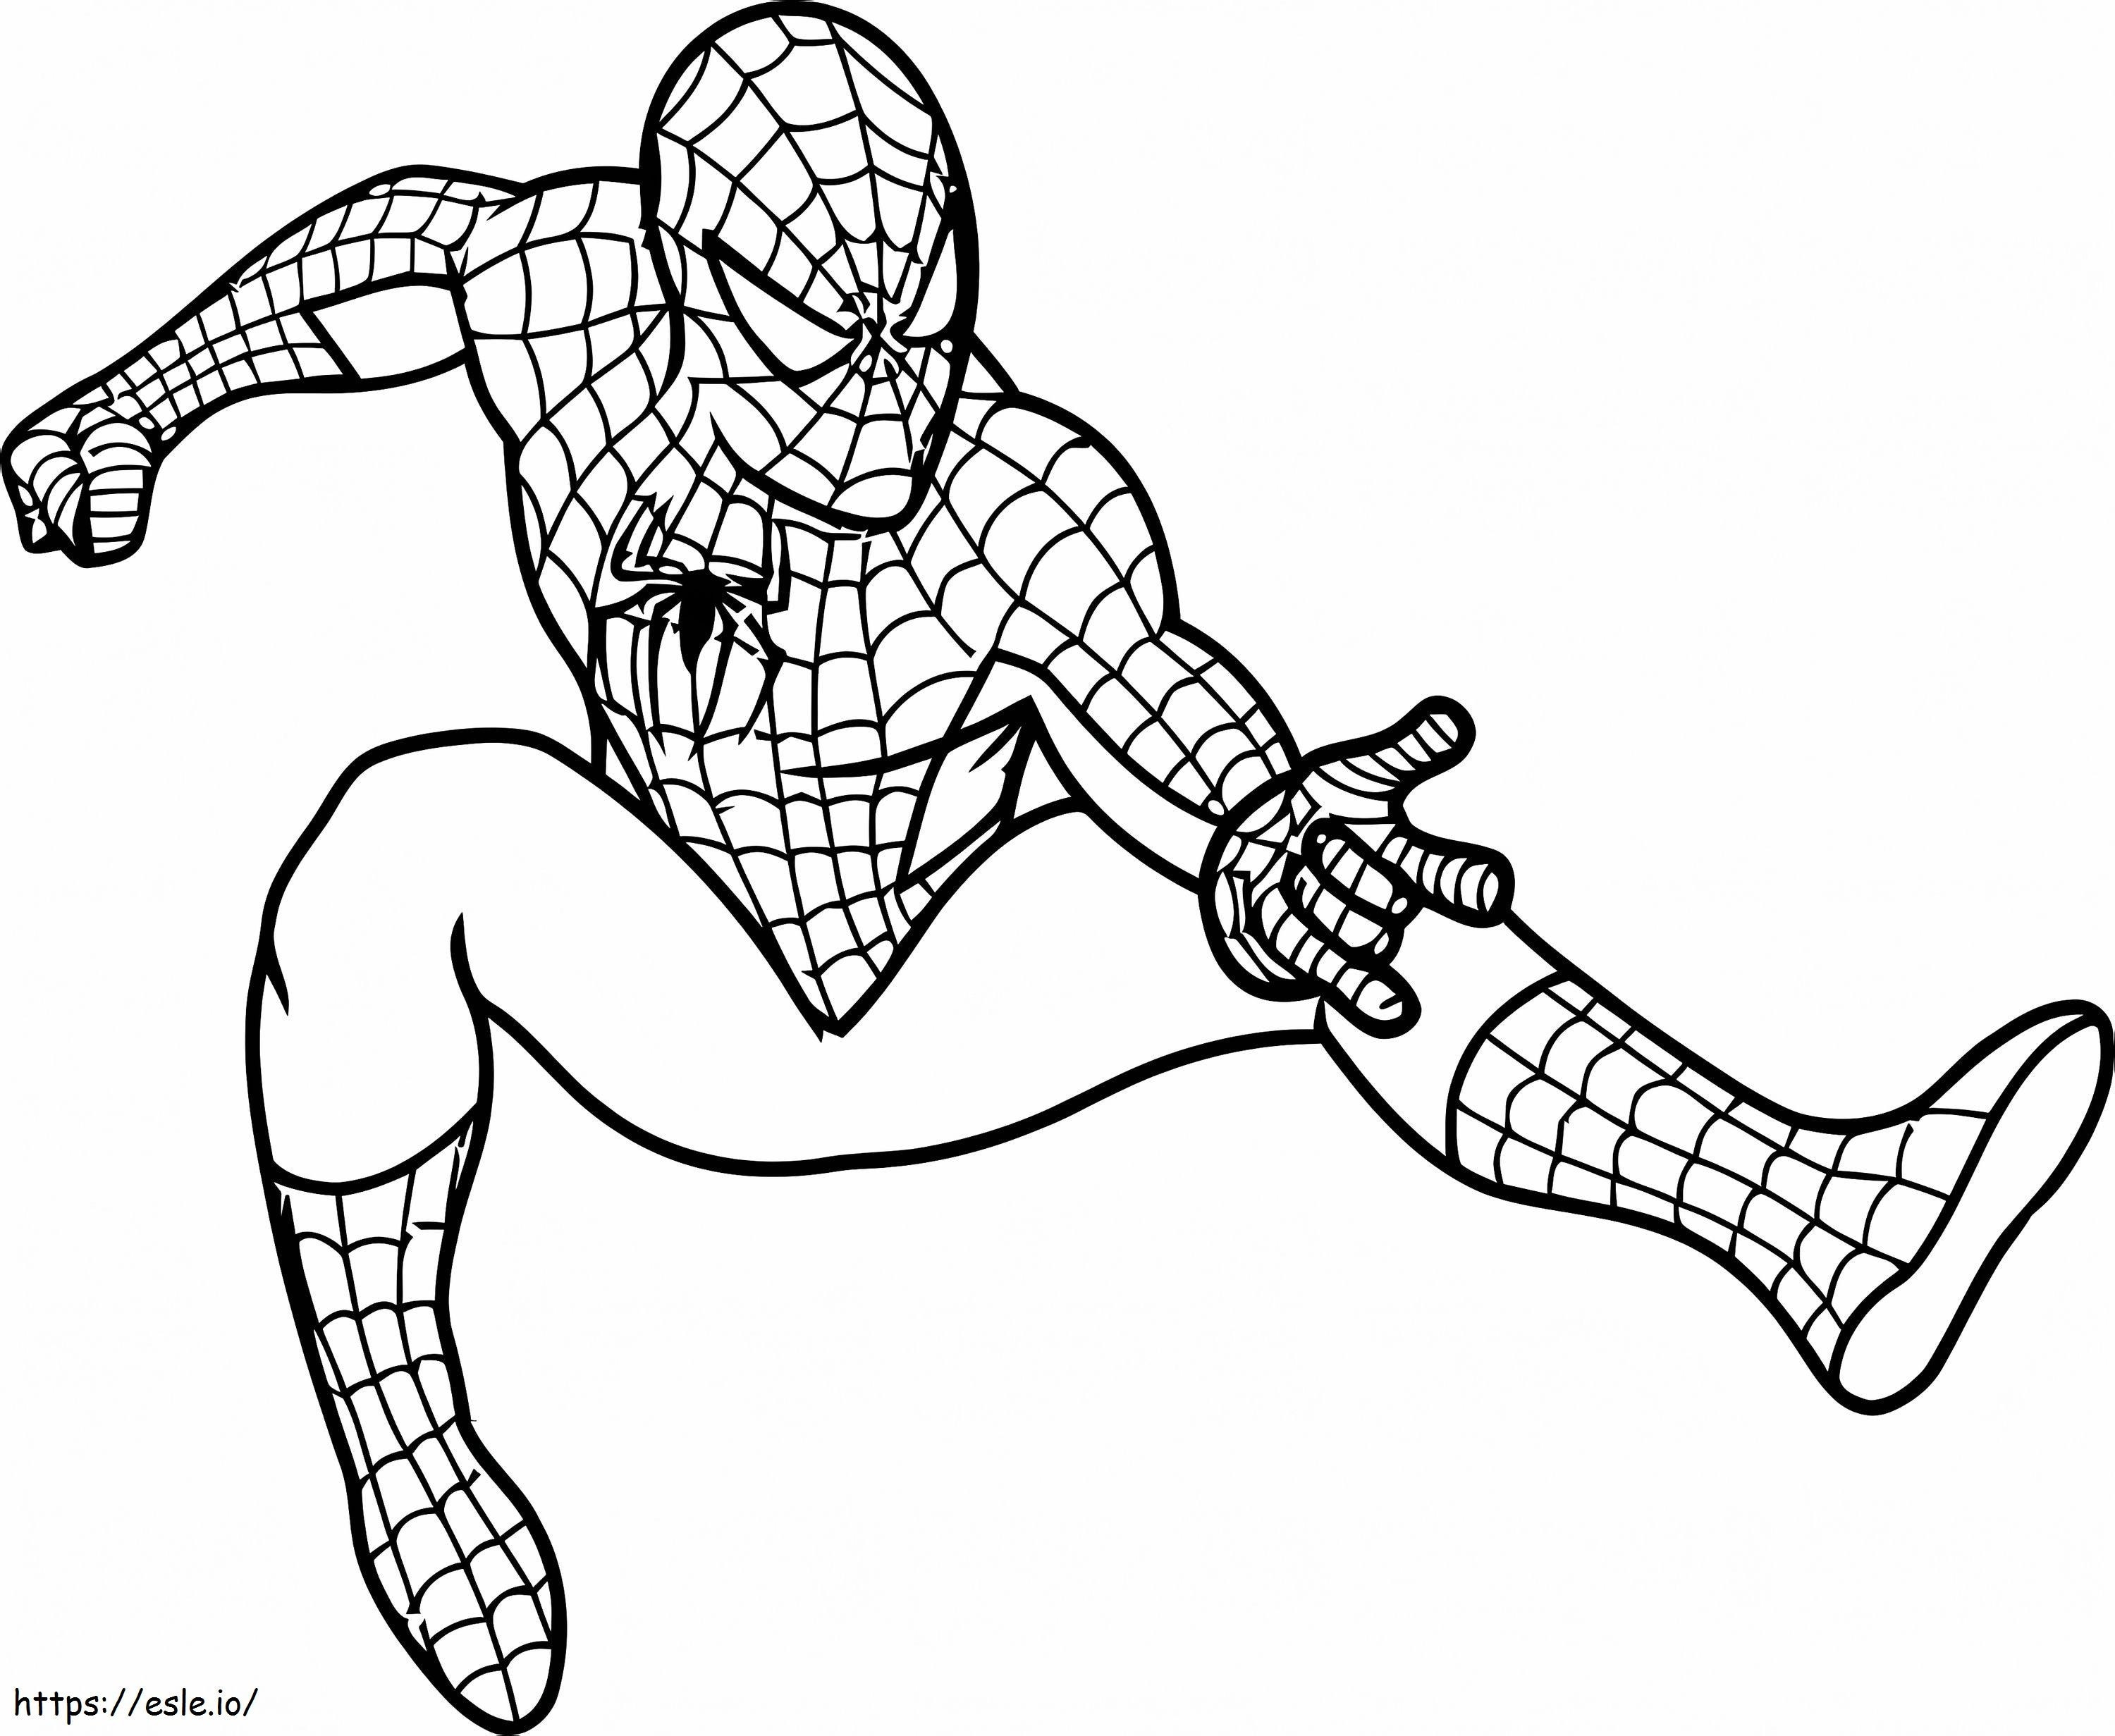 Coloriage 1532664236 Spiderman A4 à imprimer dessin